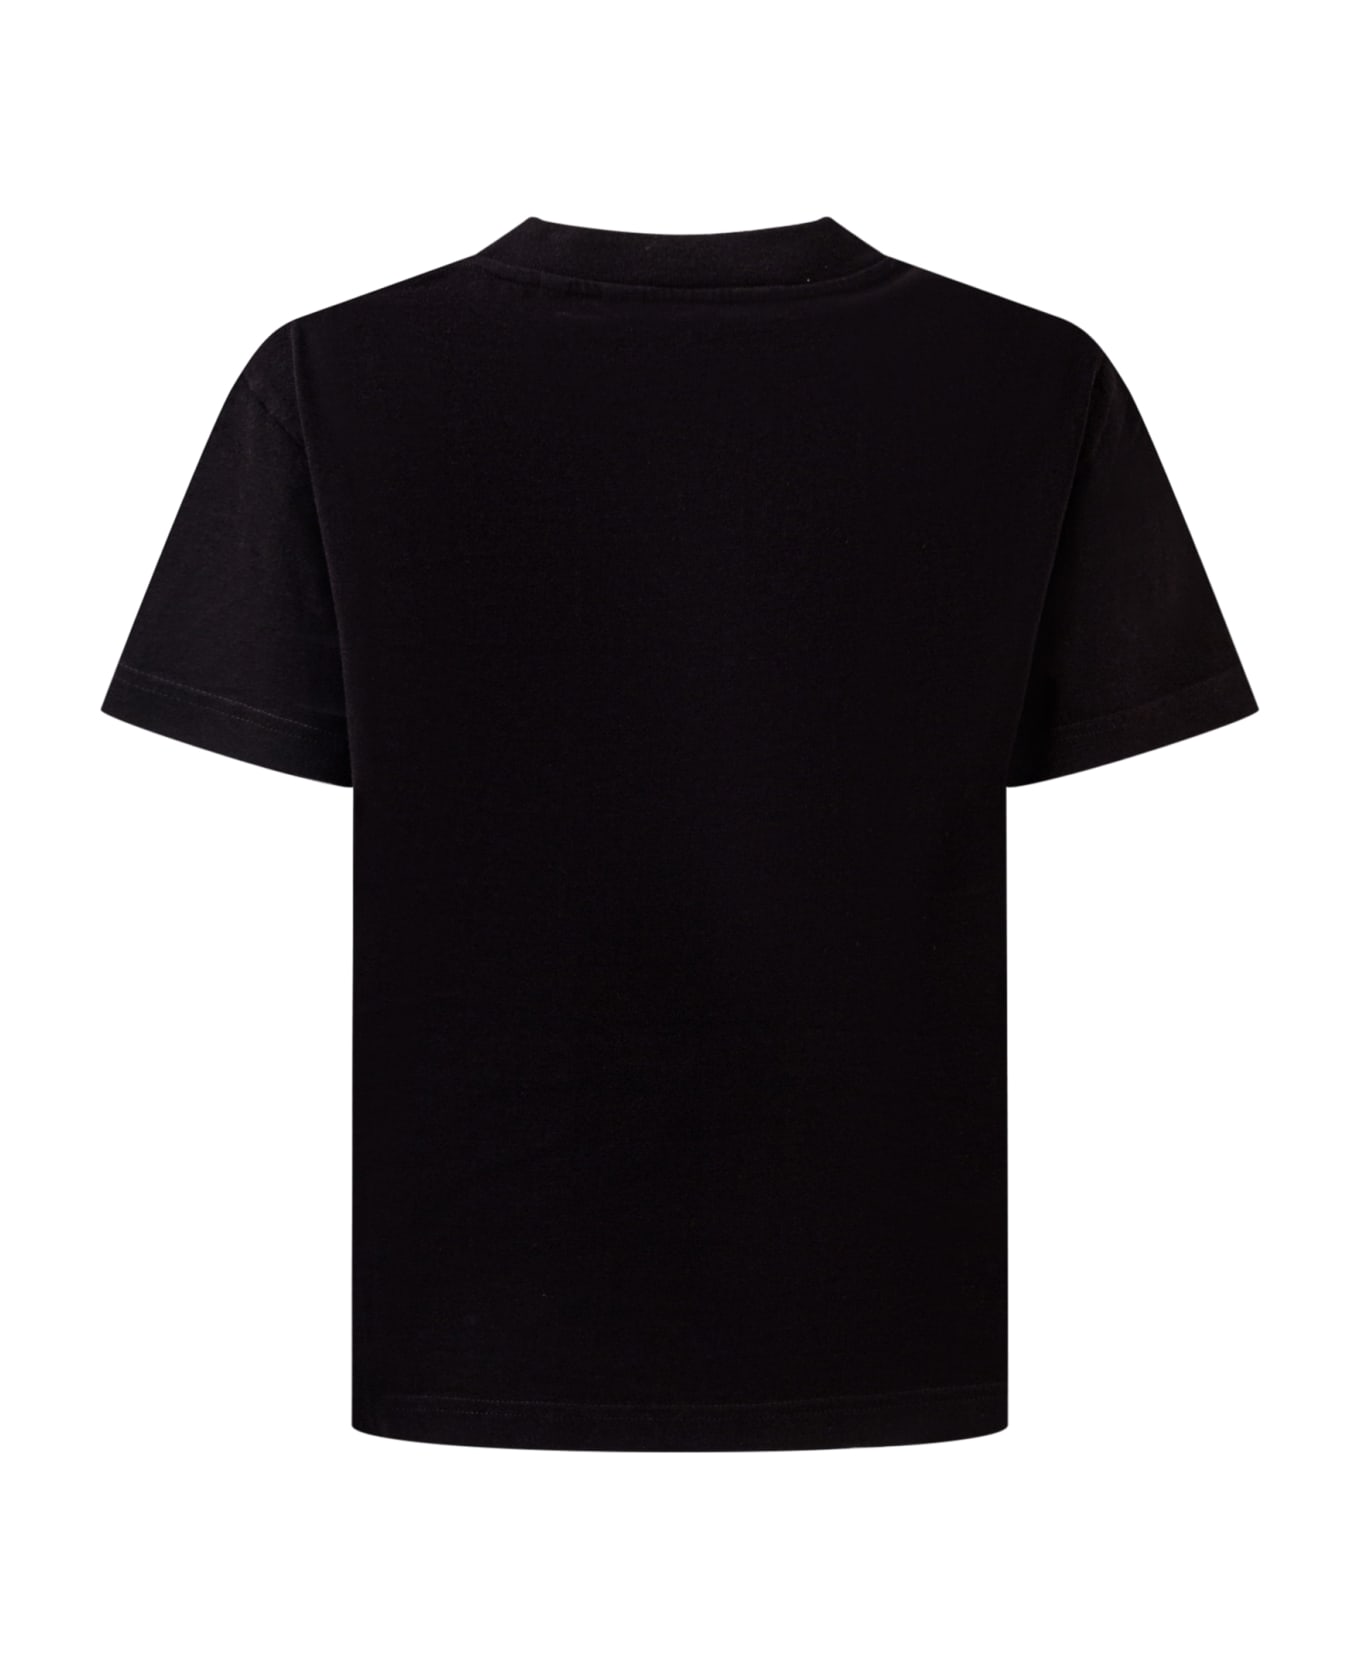 Palm Angels X Keith Haring T-shirt - BLACK